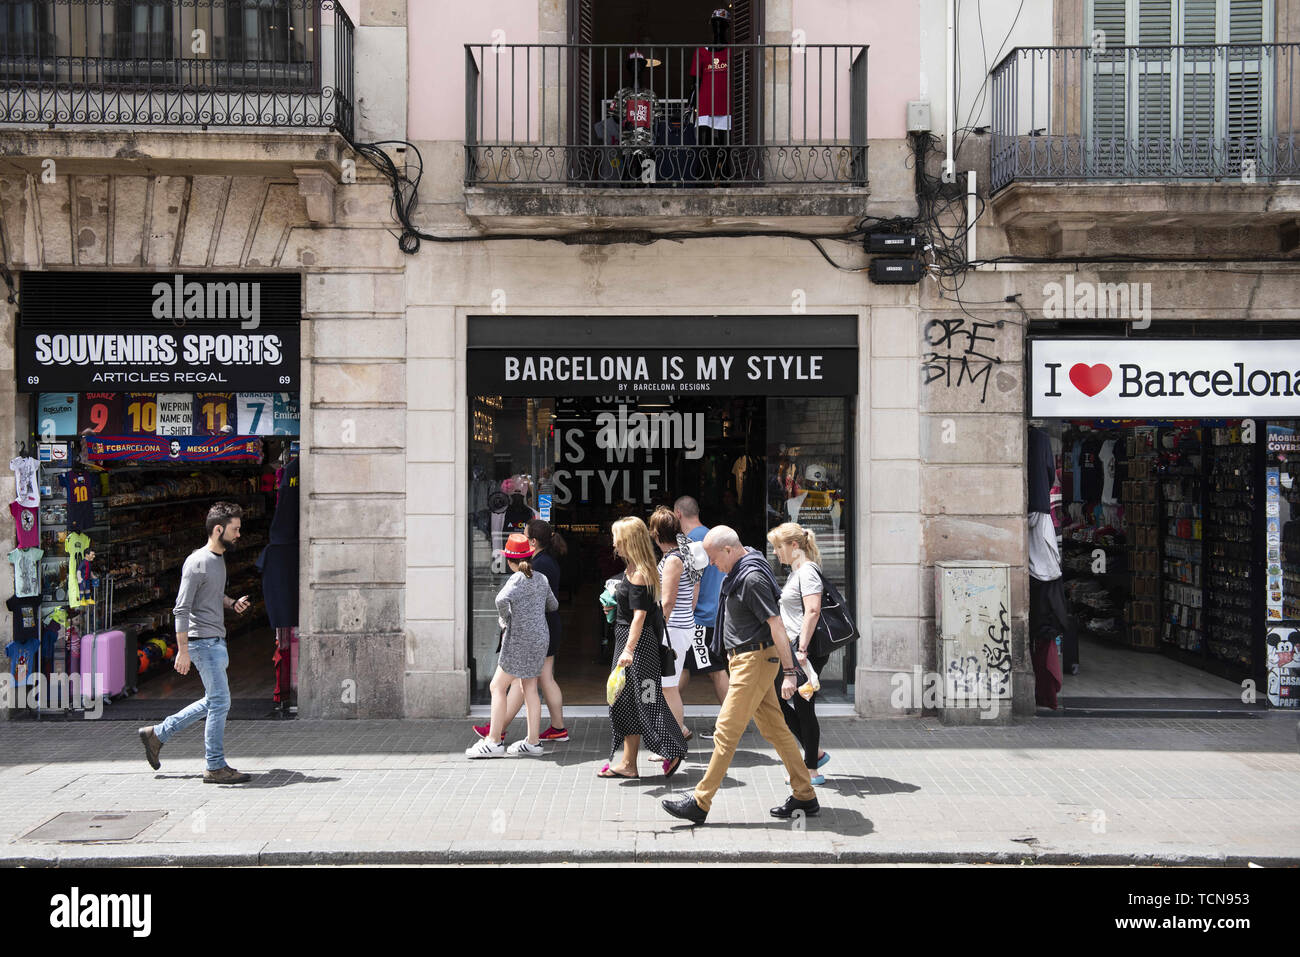 Adidas Barcelona Paseo De Gracia Sale, 59% OFF | tpg-inredningar.se